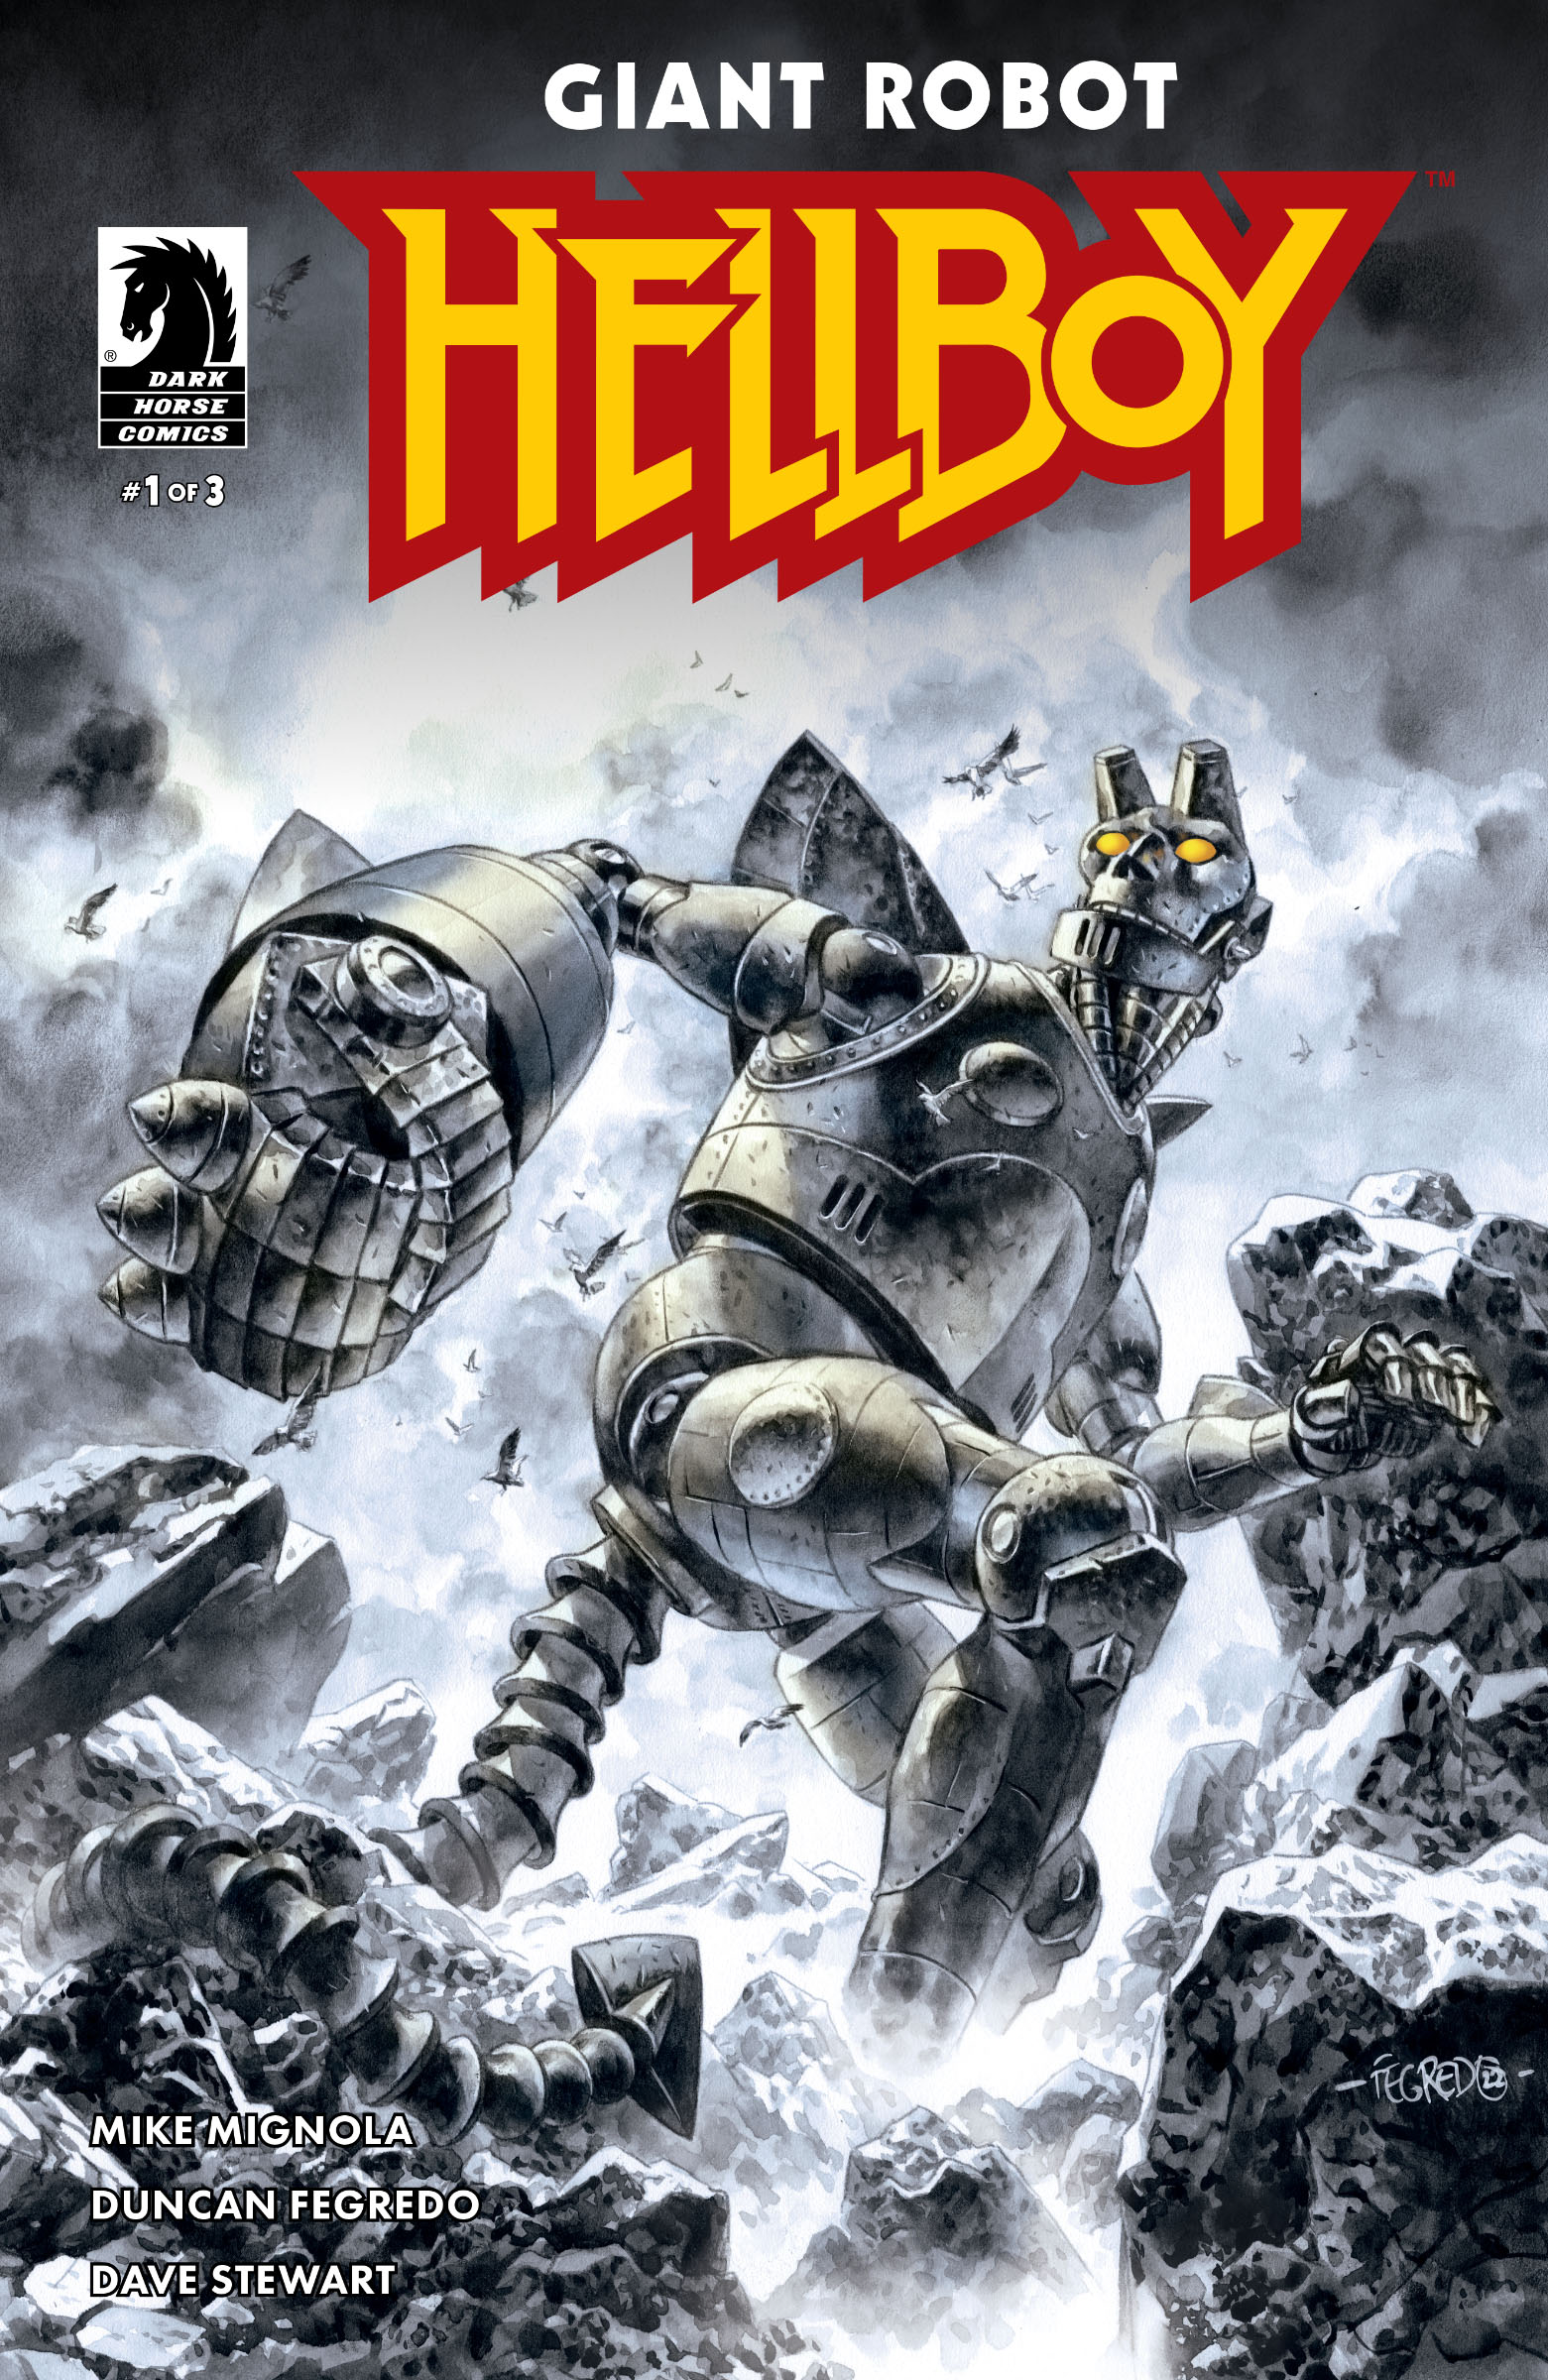 Giant Robot Hellboy #1の表紙。